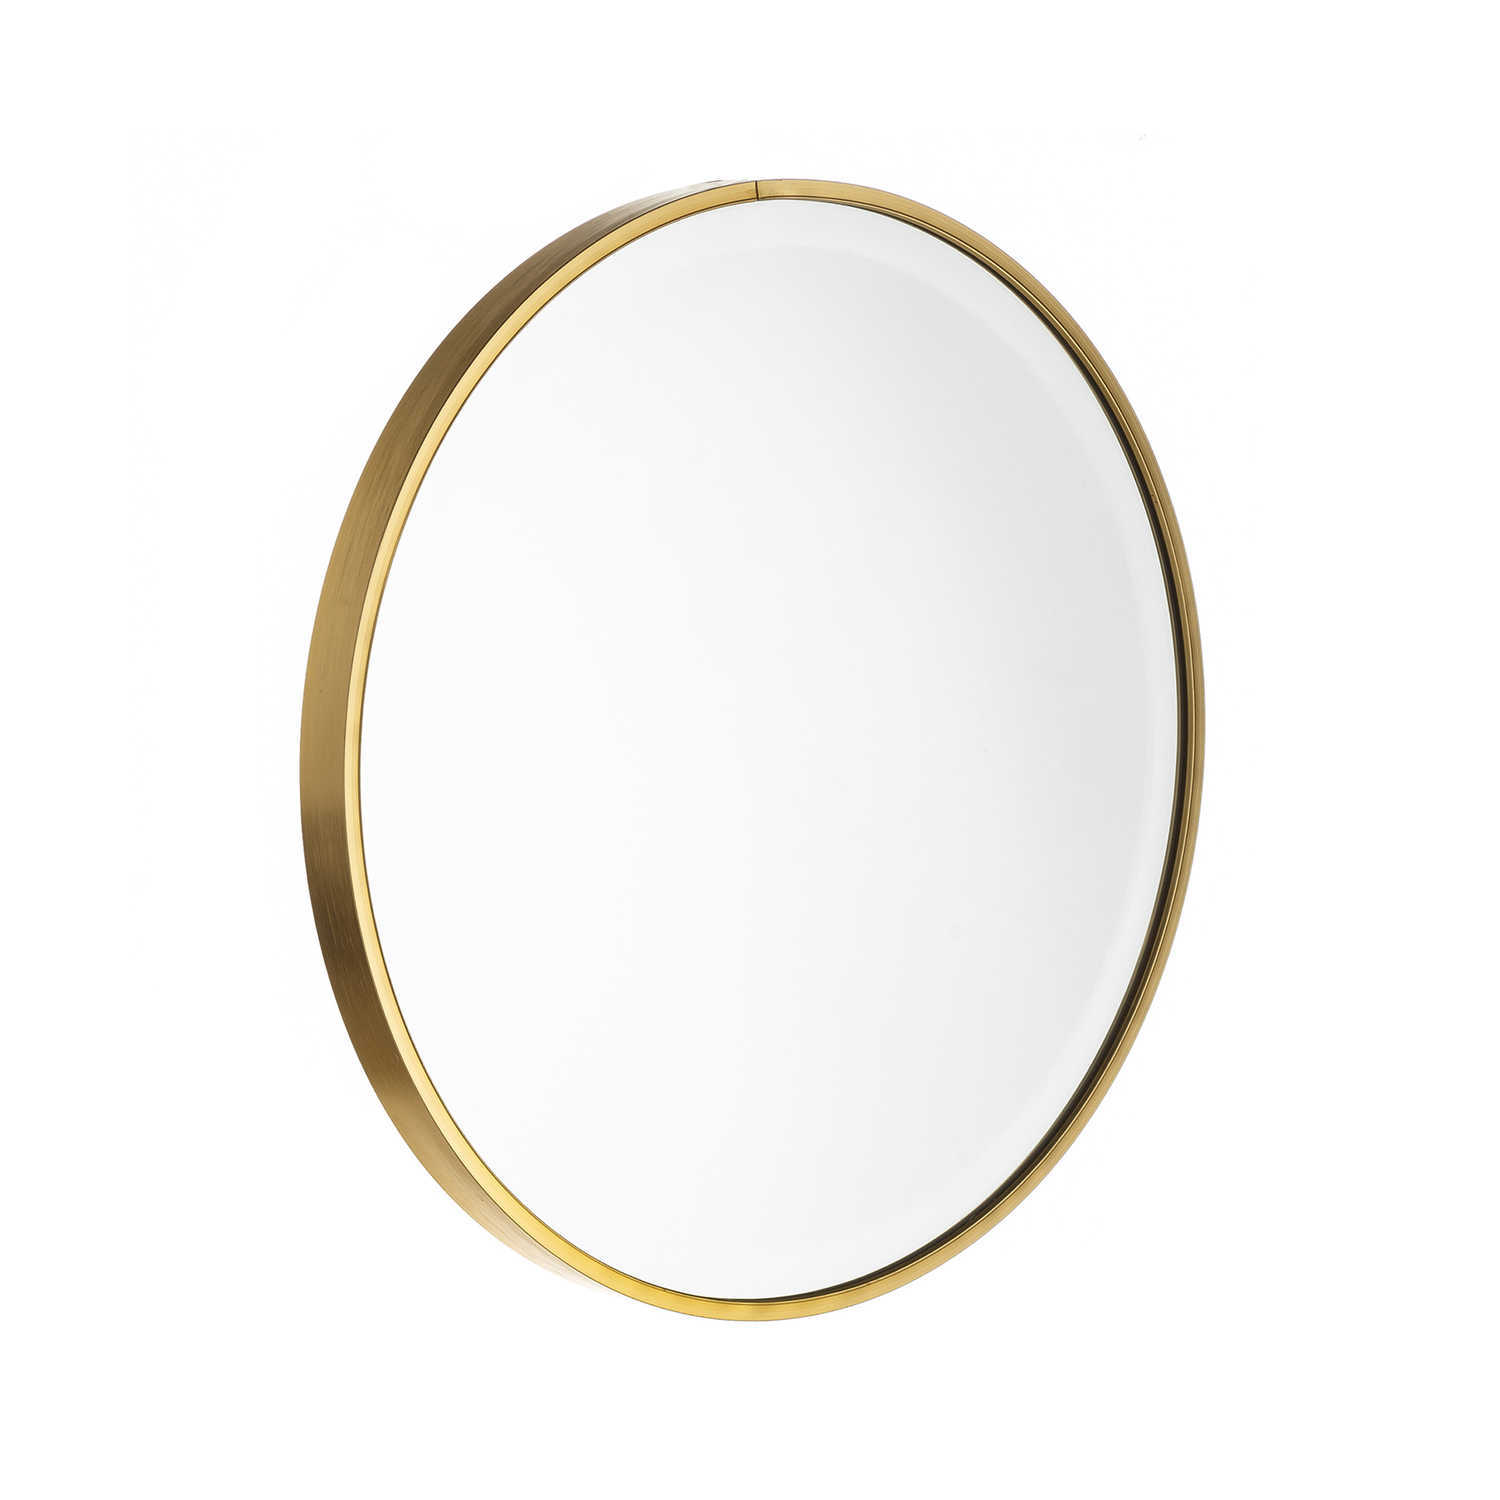 Зеркало настенное 60. Зеркало круглое migliore 30584 золото. Зеркало настенное круглое золотое "Гелиос Голд". Круглое зеркало 70 см jusk золото. Зеркало настенное круглое золотое матовое «Ардан Голд».